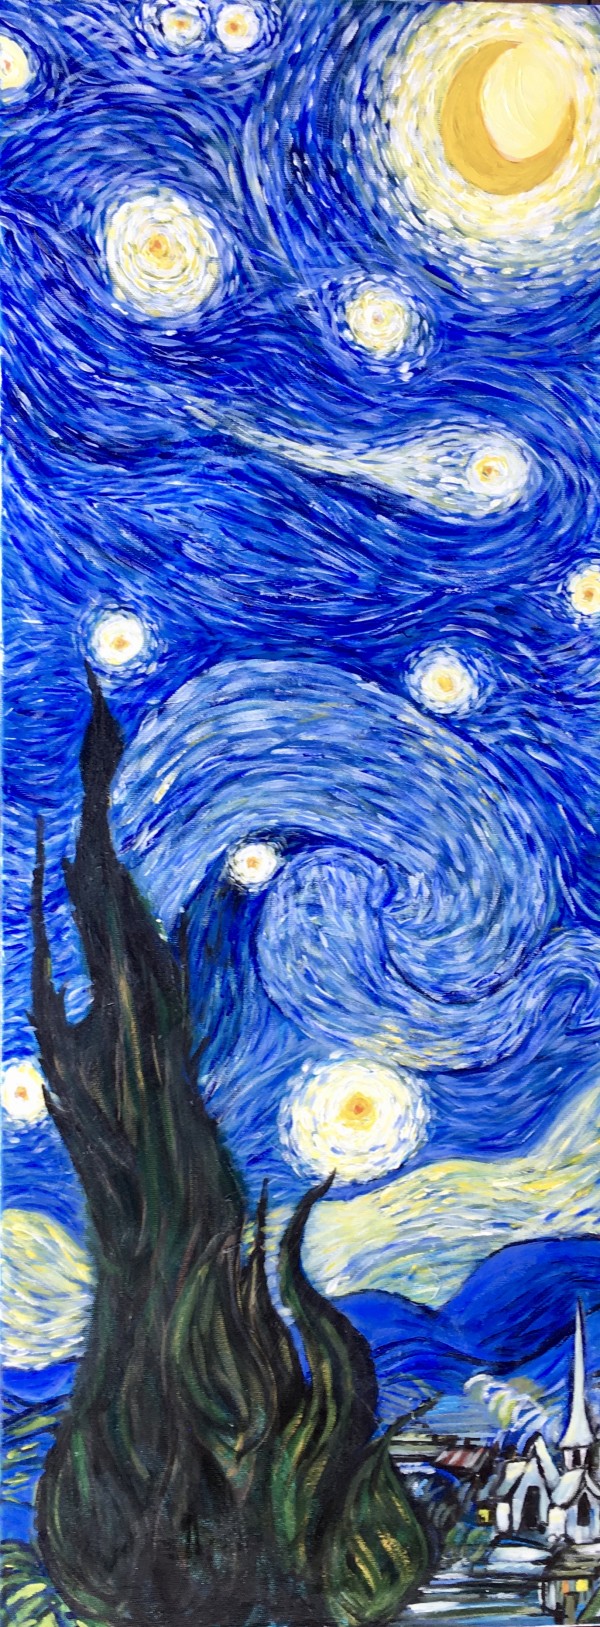 A taste of Van Gogh by Wendy Bache